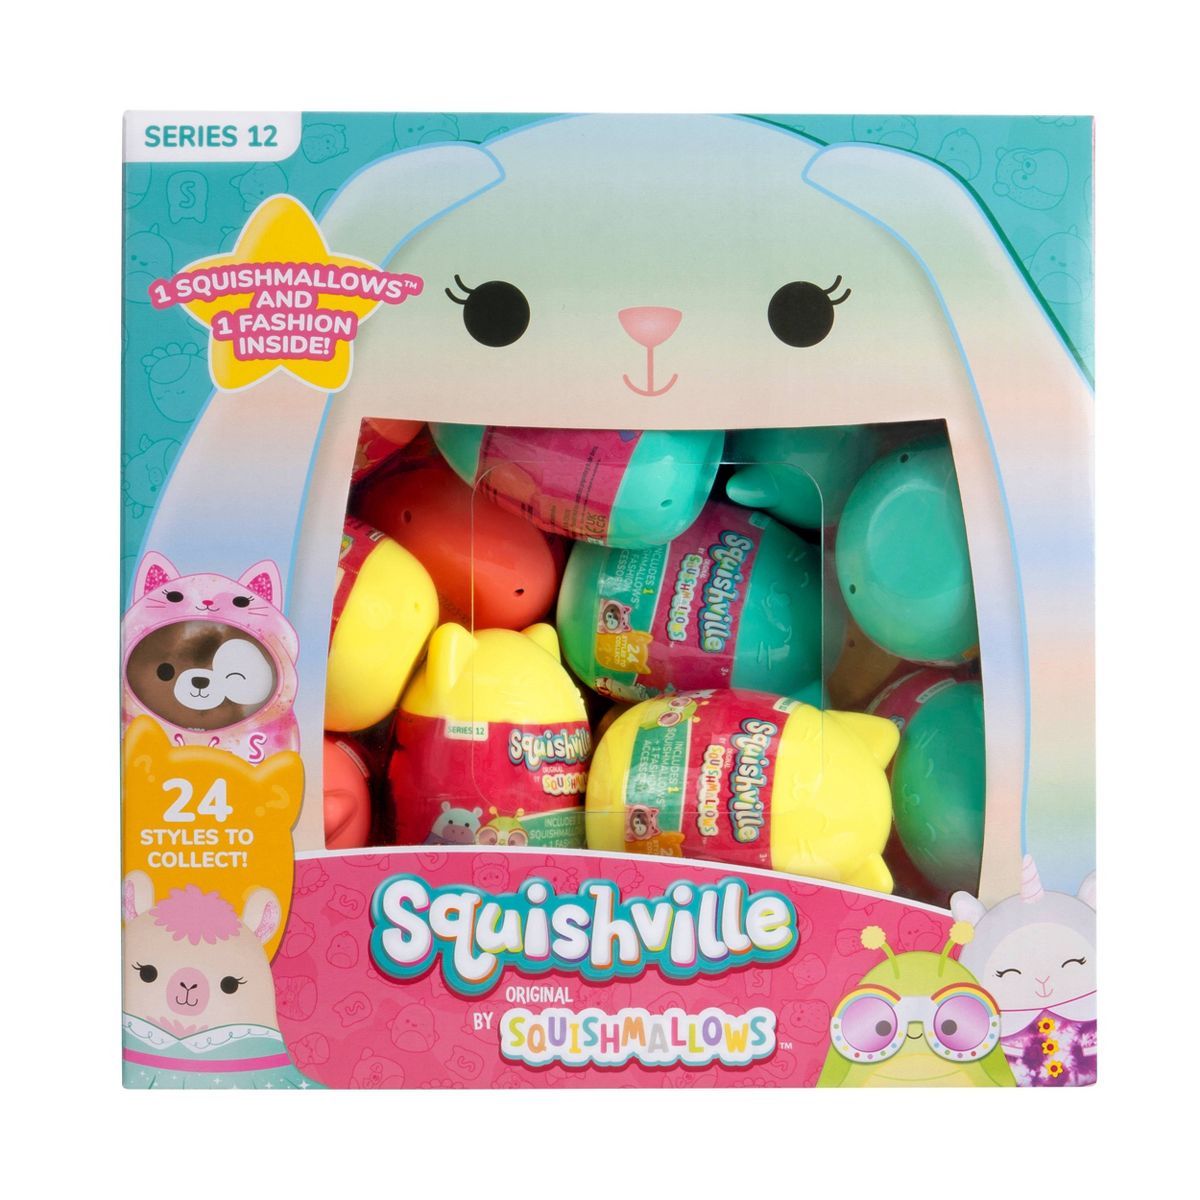 Squishmallows Squishville Blind Plush | Target